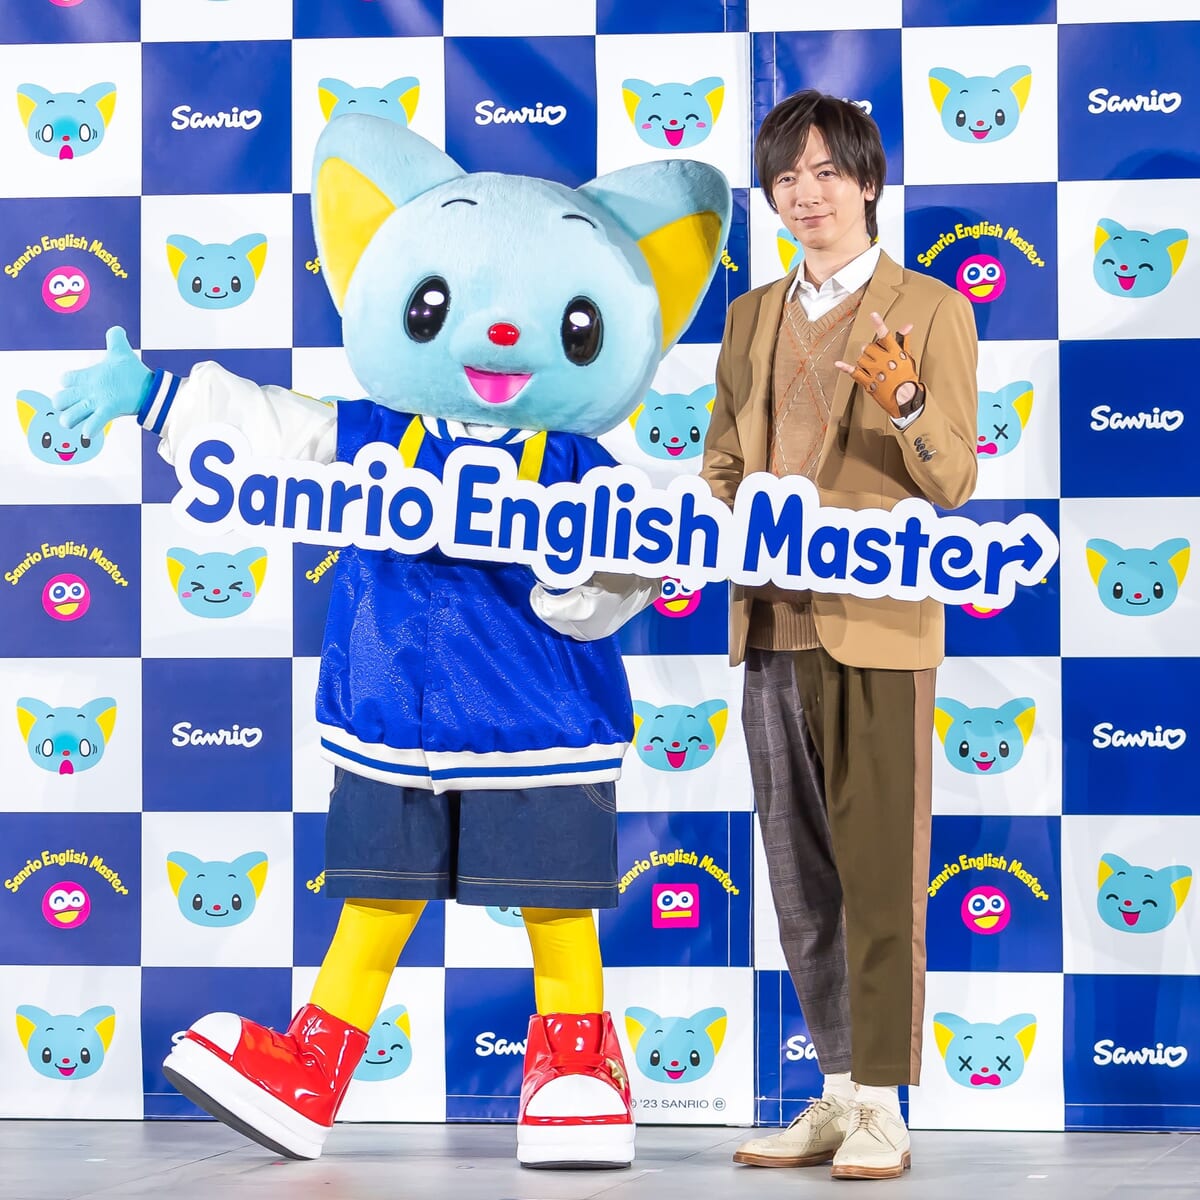 「Sanrio English Master」サービス発表会2